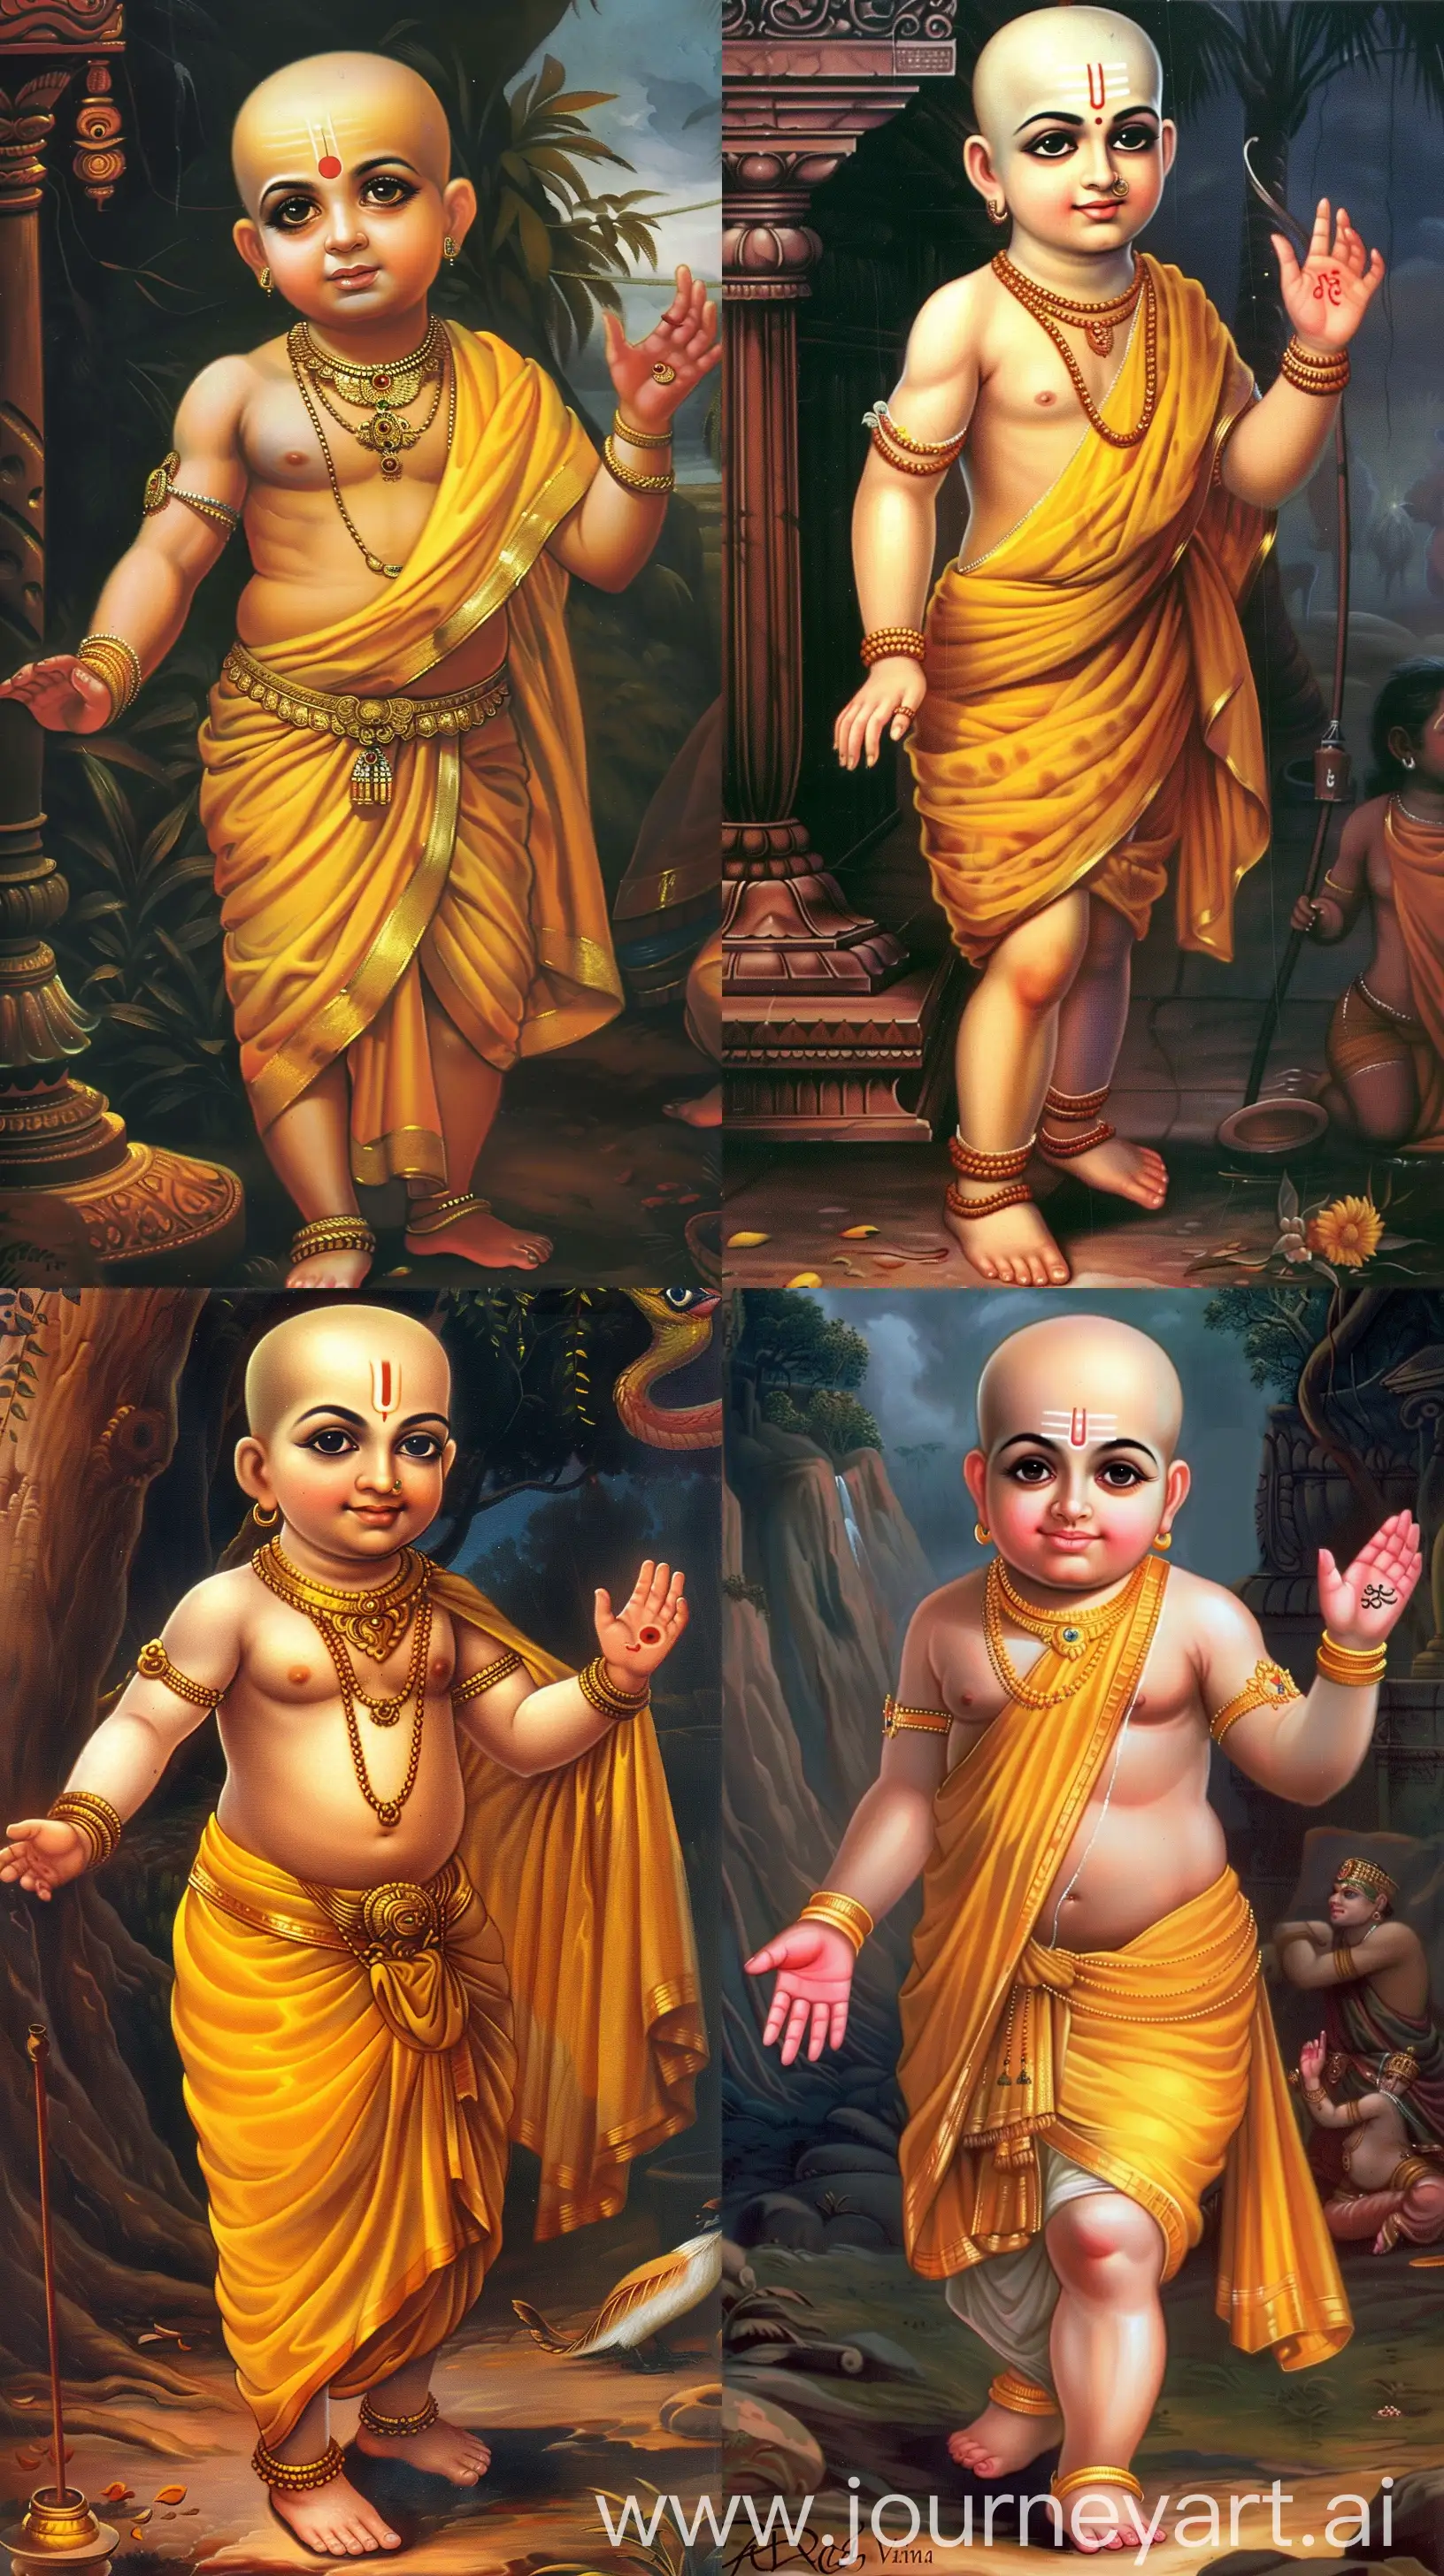 Raj Ravi Varma art style image of Vaman avatar from Hinduism, Vaman as a short Statured young Brahman in yellow attire, bald and no beard, little chubby from ancient Indian times, seen talking, hand gestures, intricate details, 8k image --ar 9:16  --sref https://i.postimg.cc/6qZWsf2W/1382972979-vaman-avatar.jpg --v 6